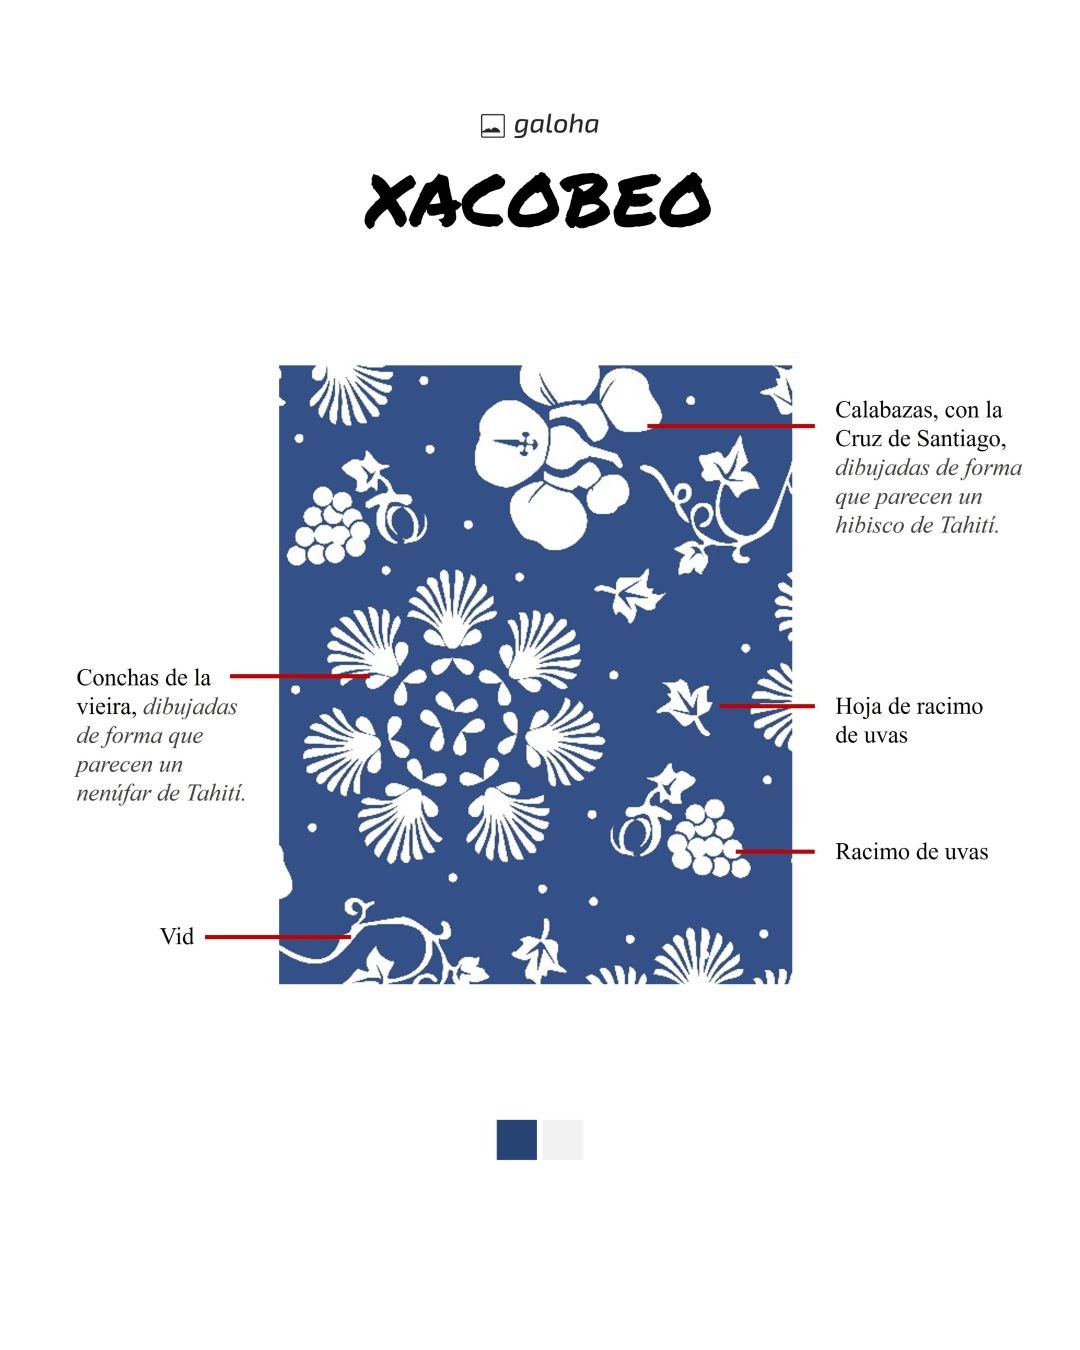 XACOBEO Azul - Camisa Galoha